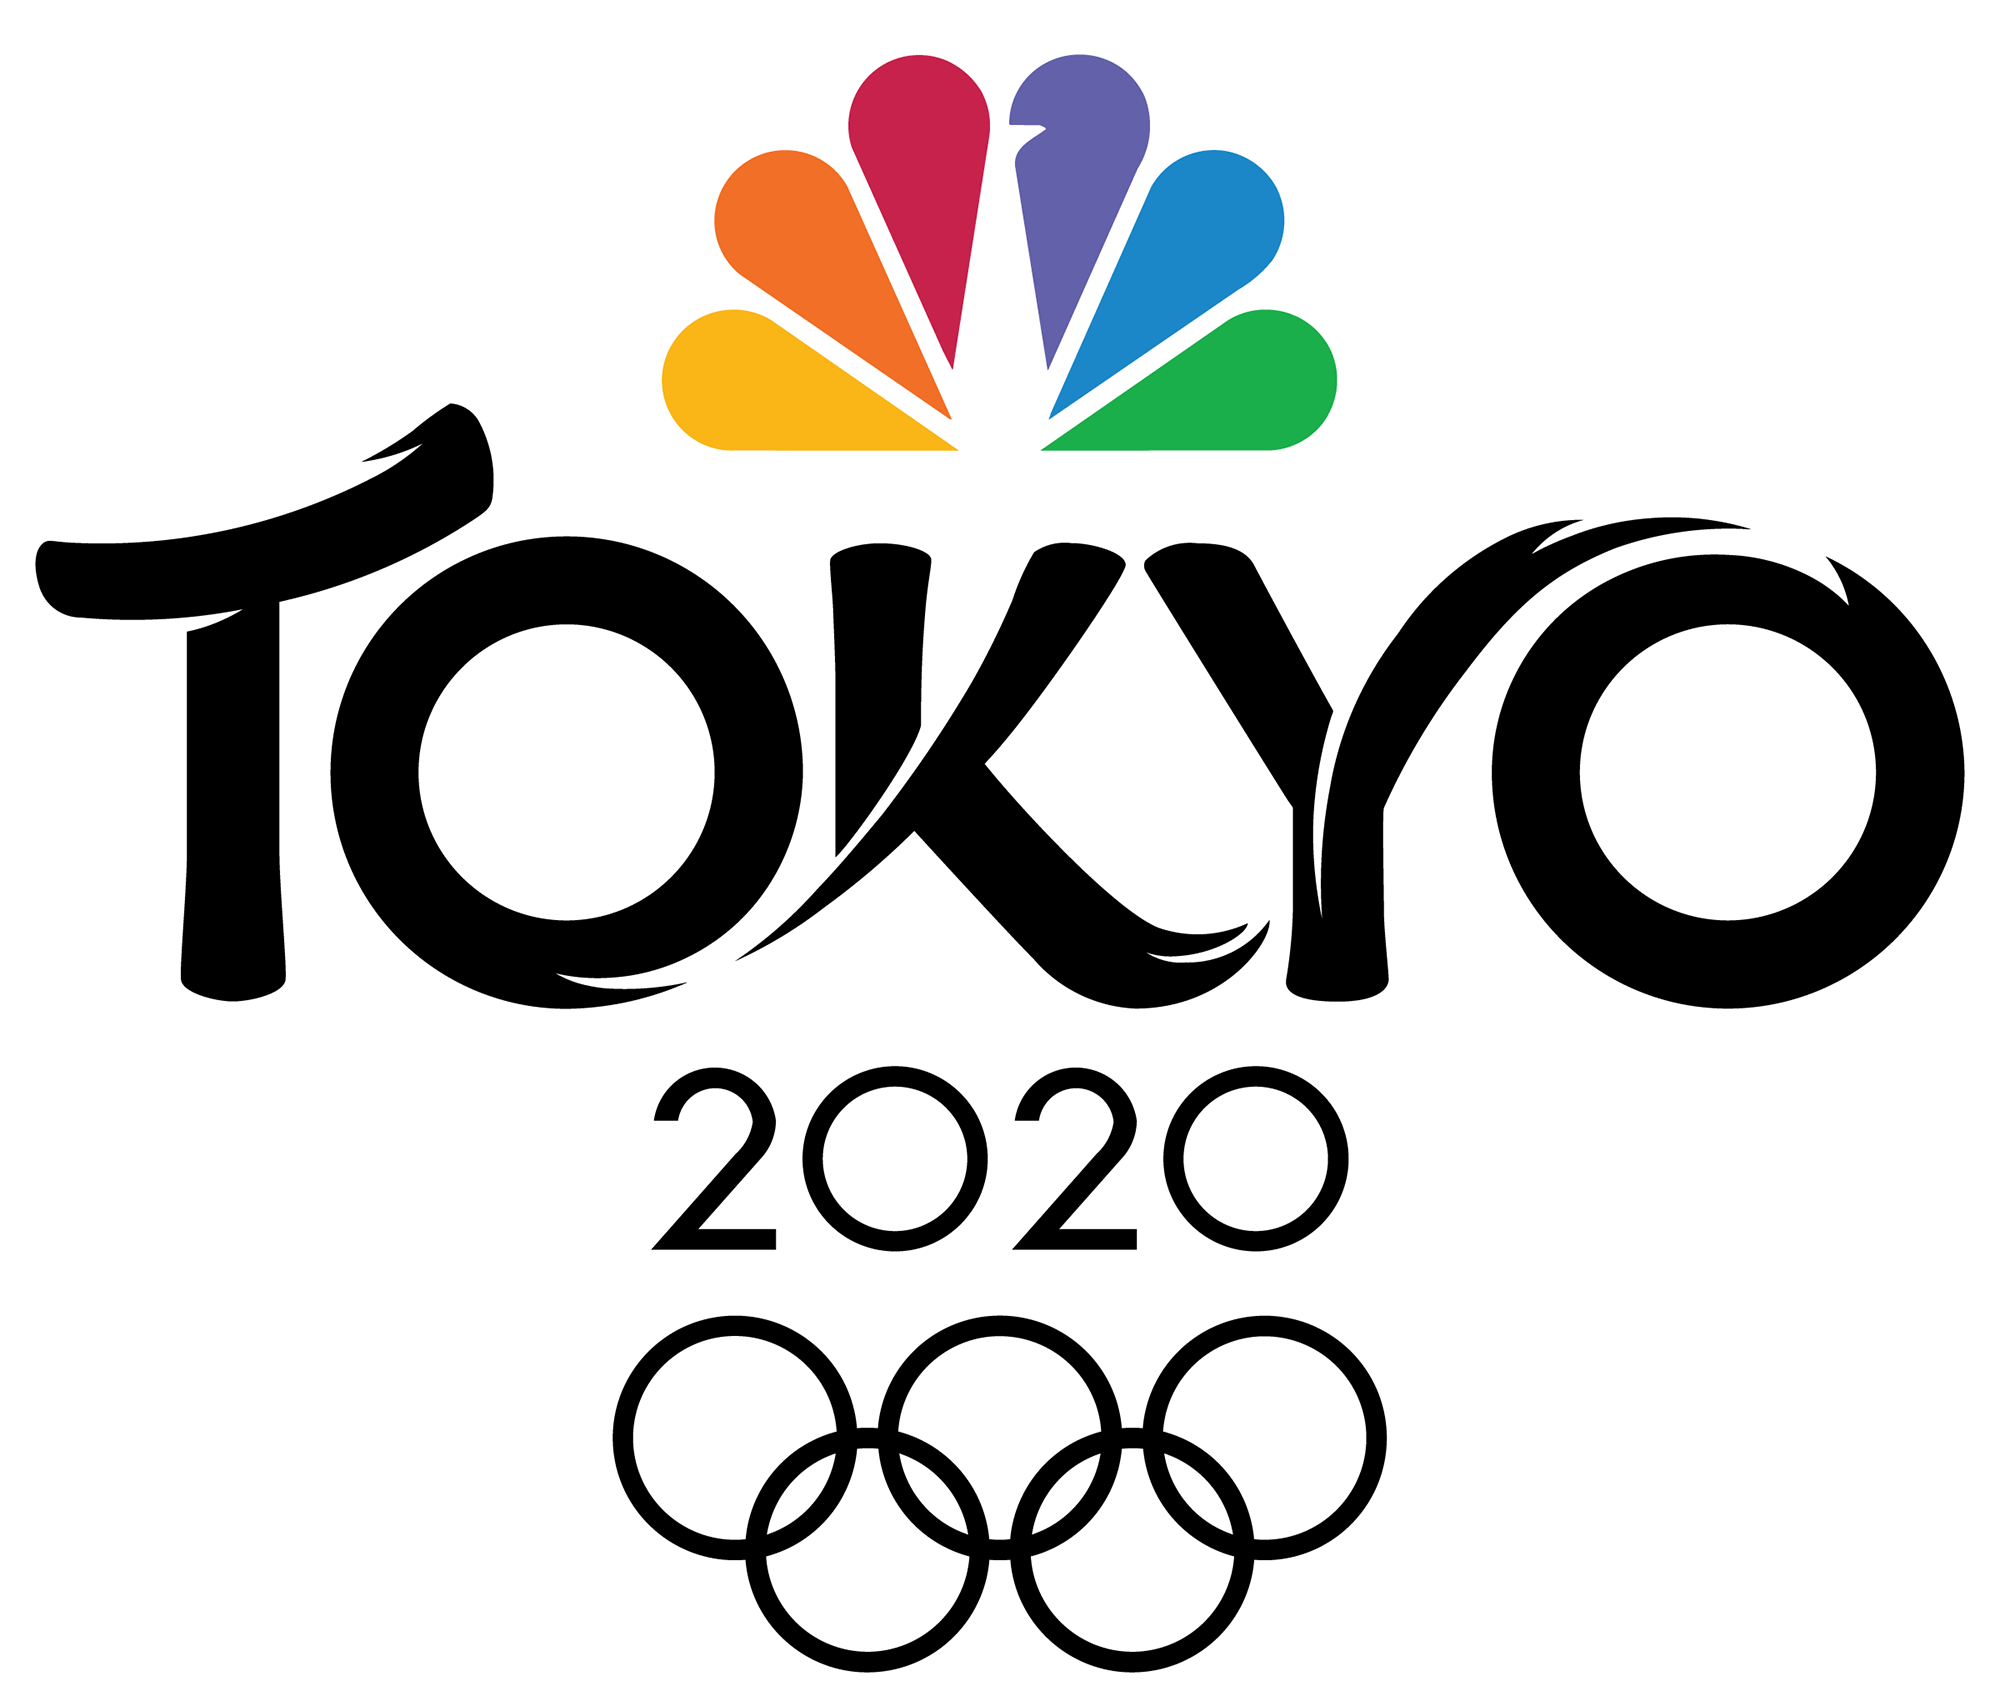 NBC Olympics Logo